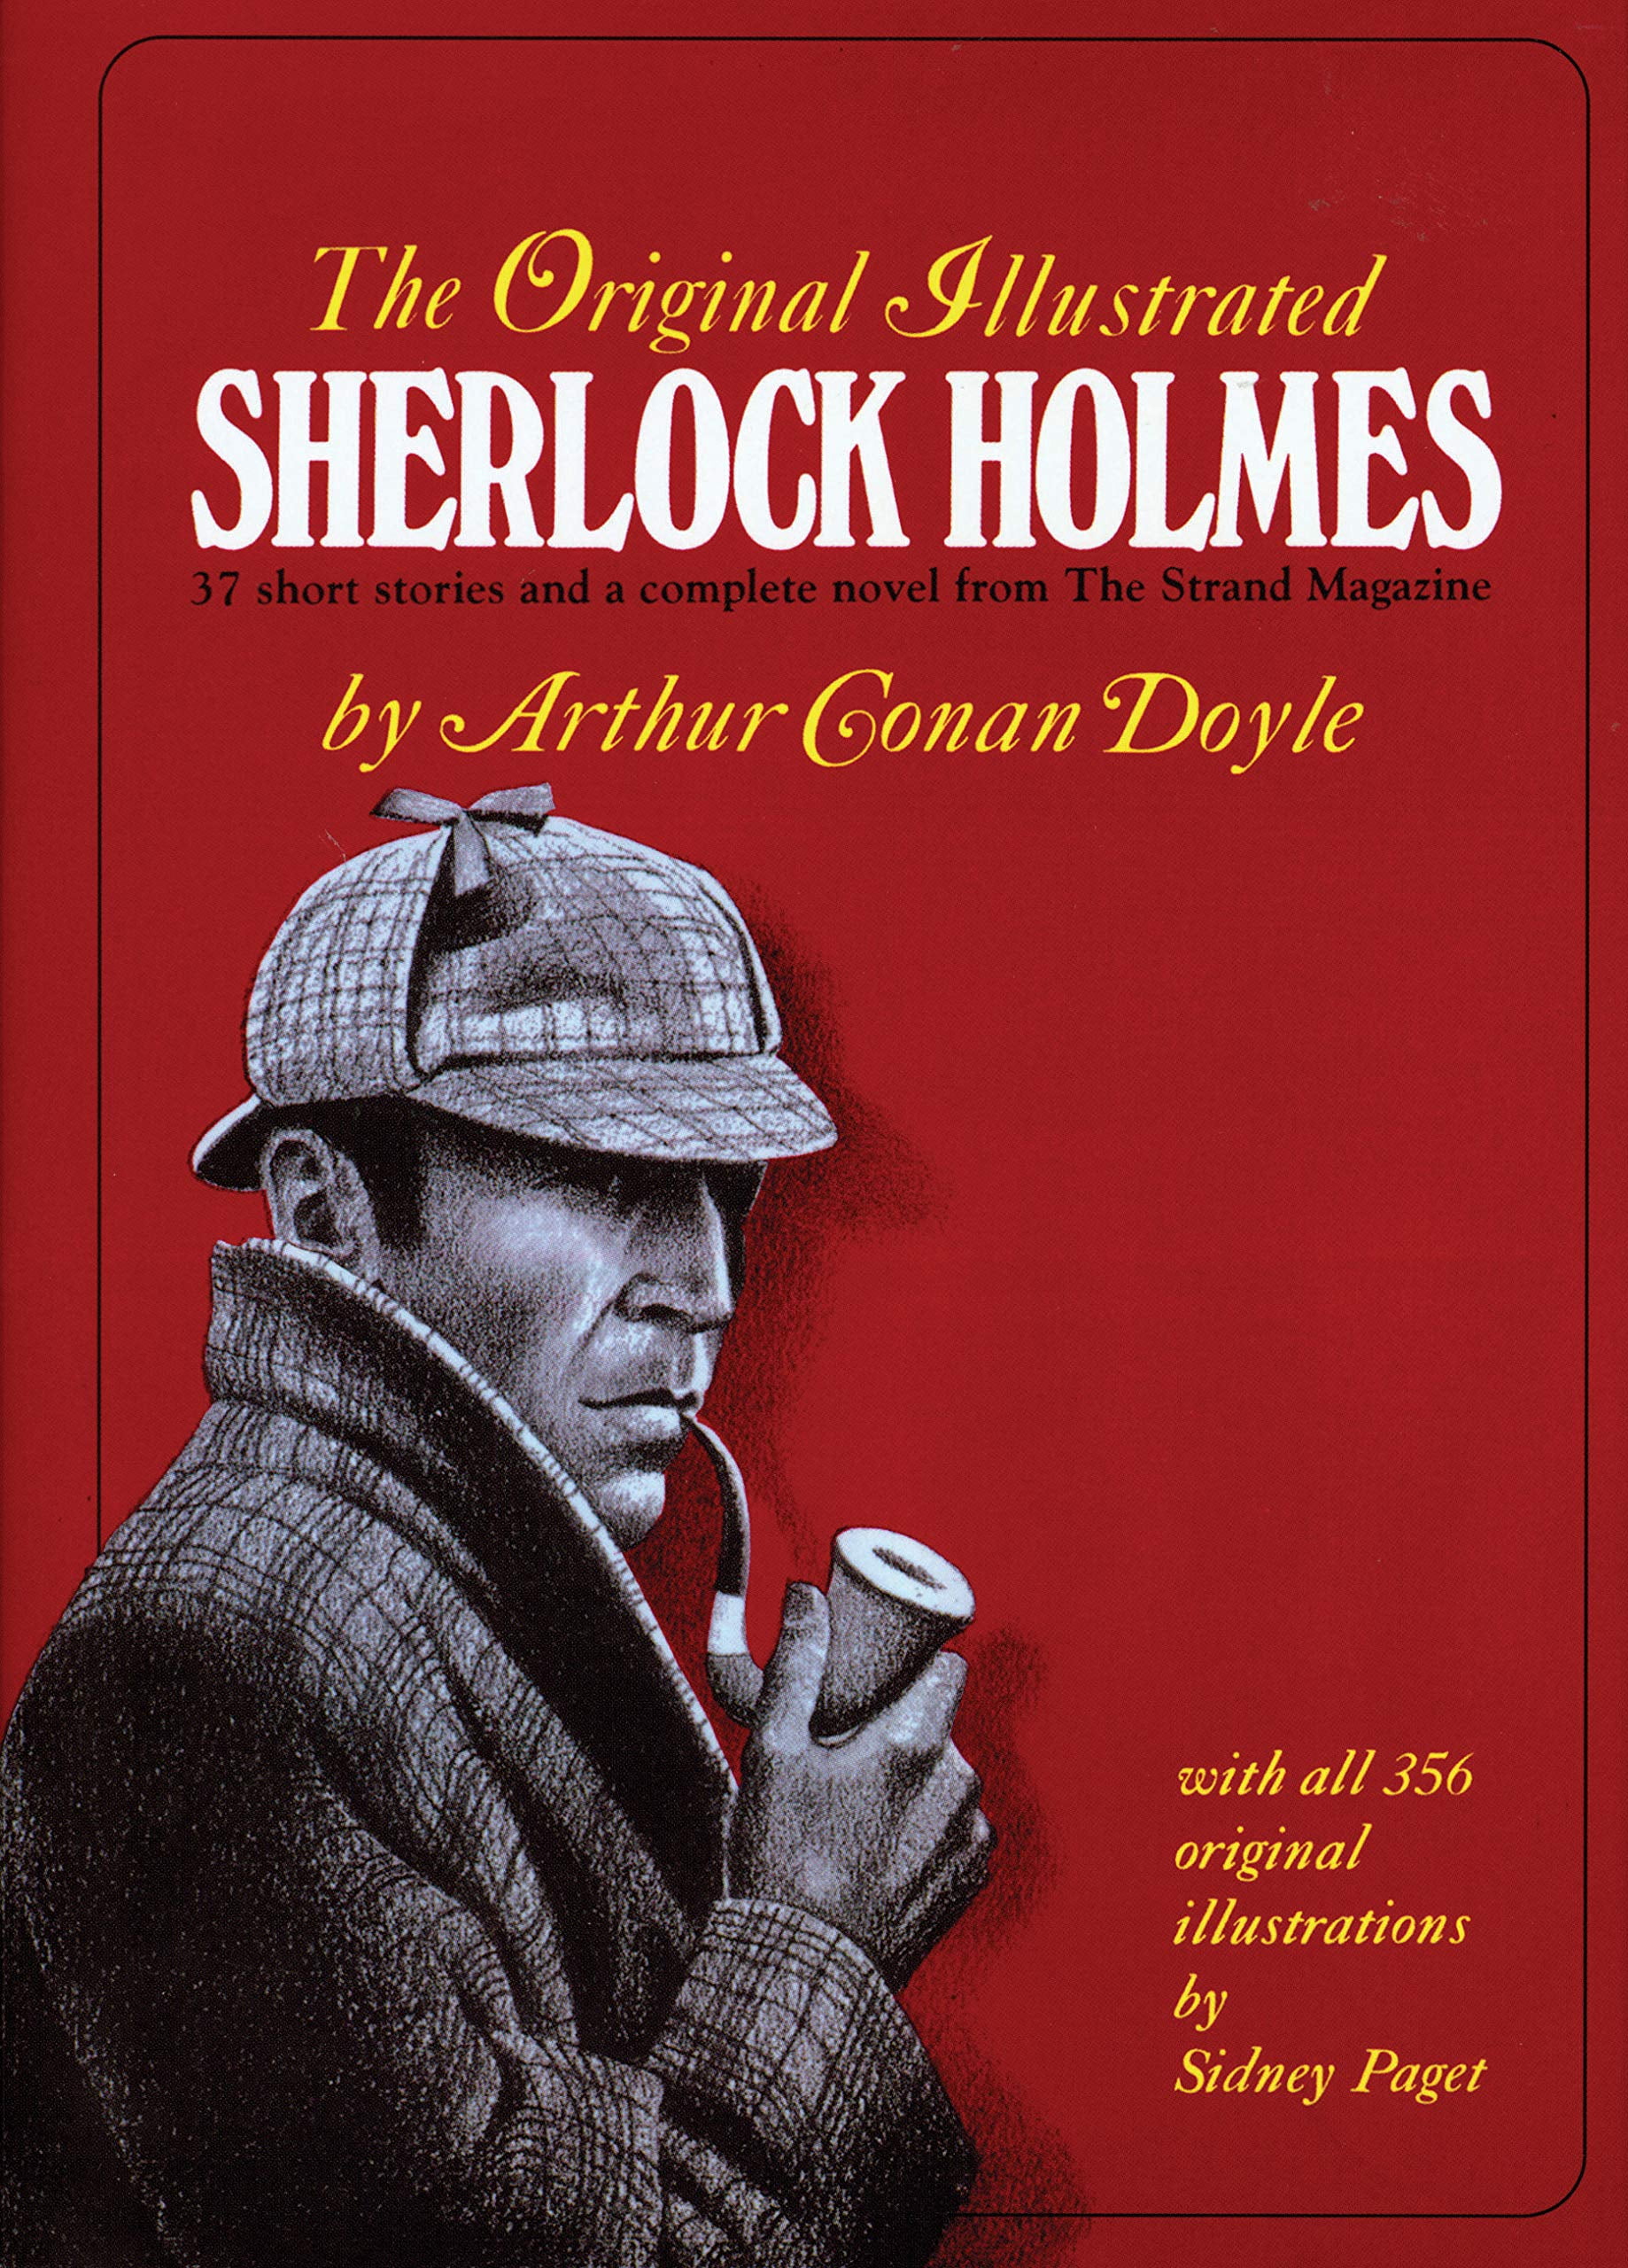 Sherlock holmes books